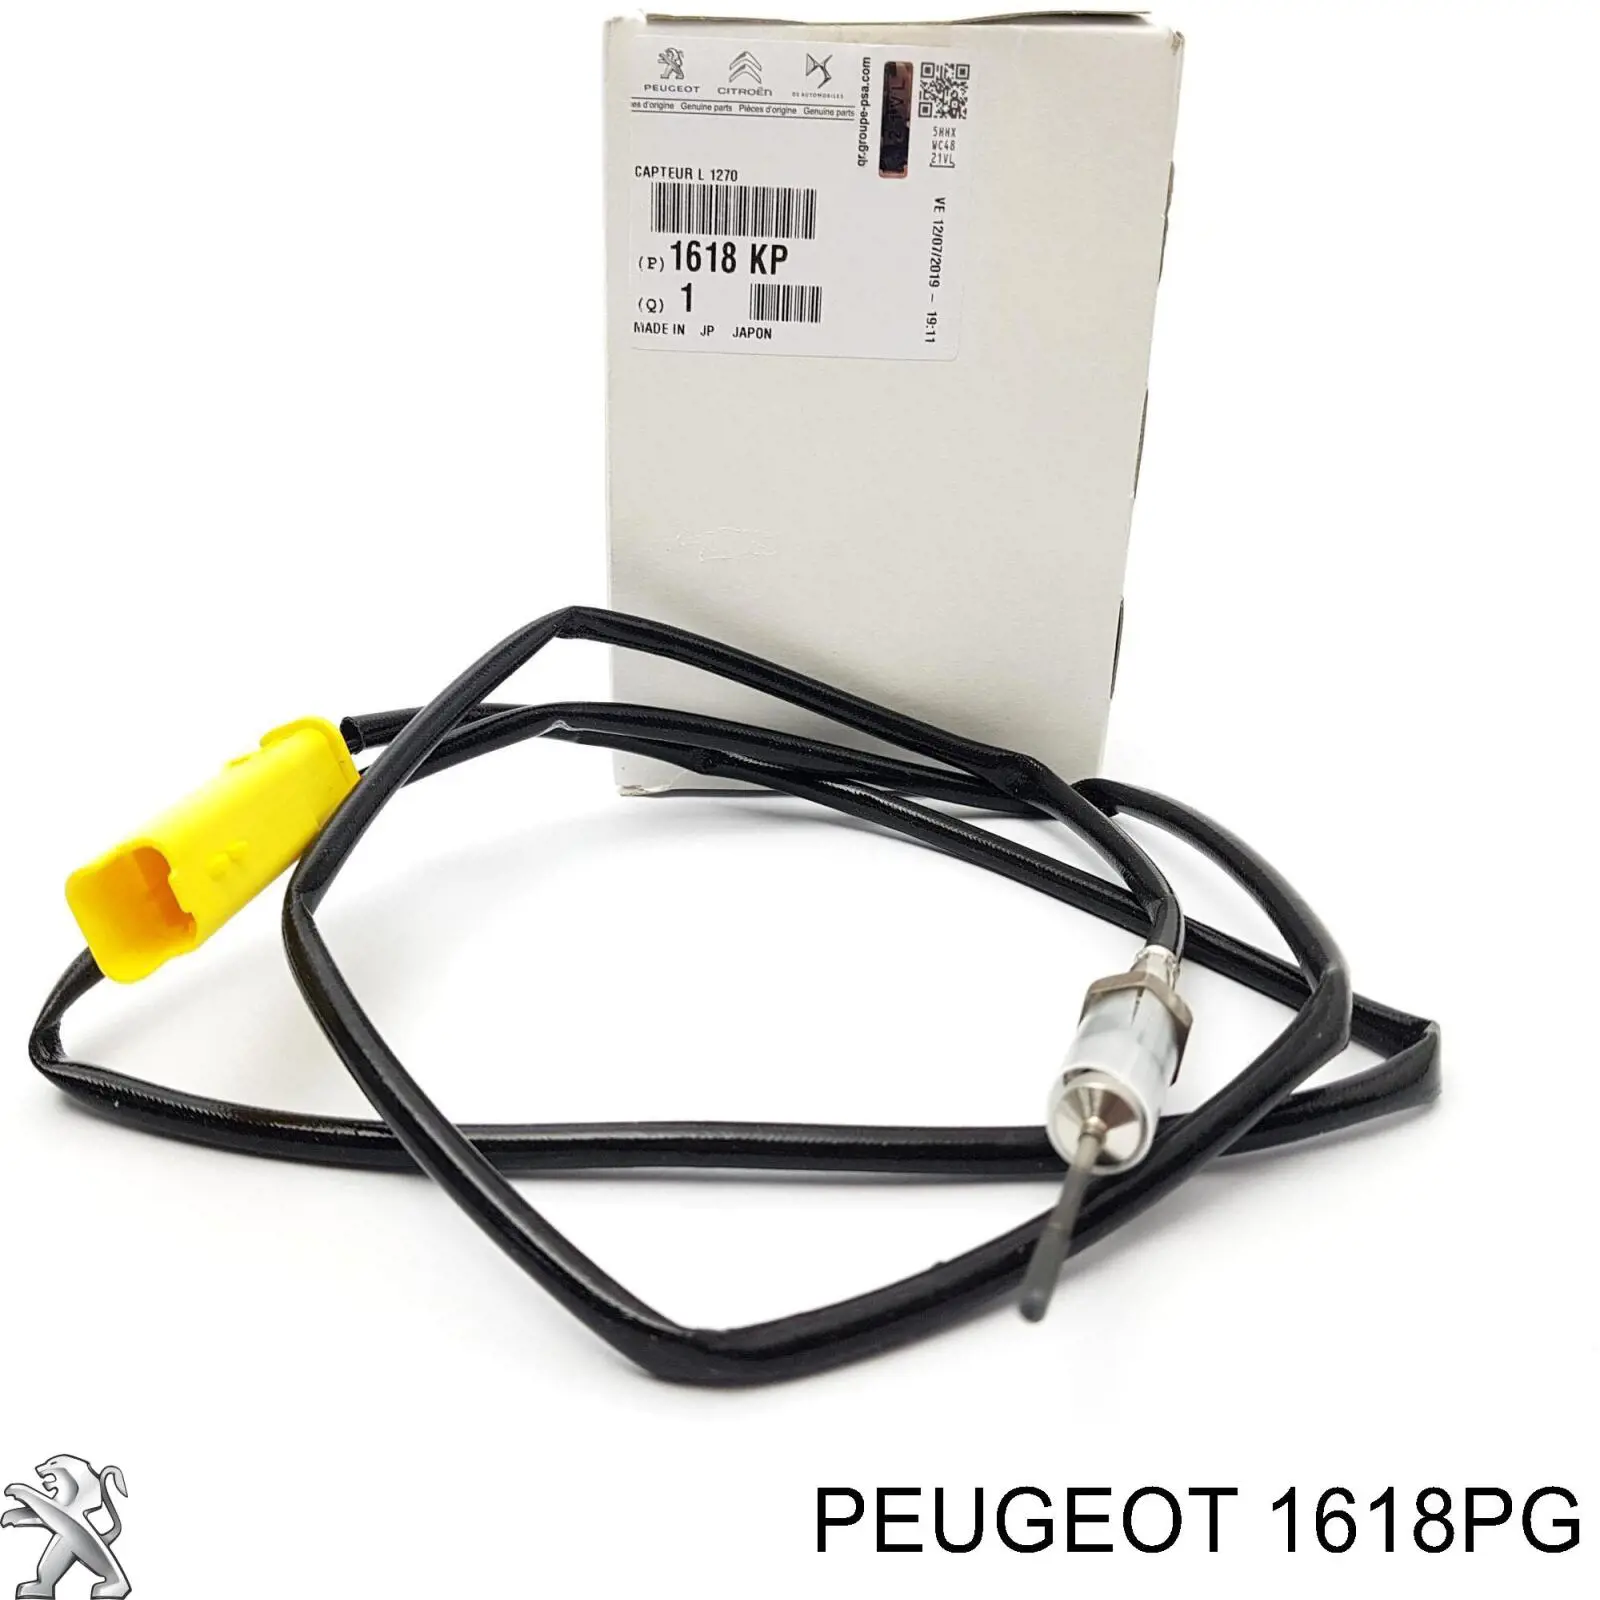 9635119080 Peugeot/Citroen sensor de temperatura, gas de escape, después de filtro hollín/partículas